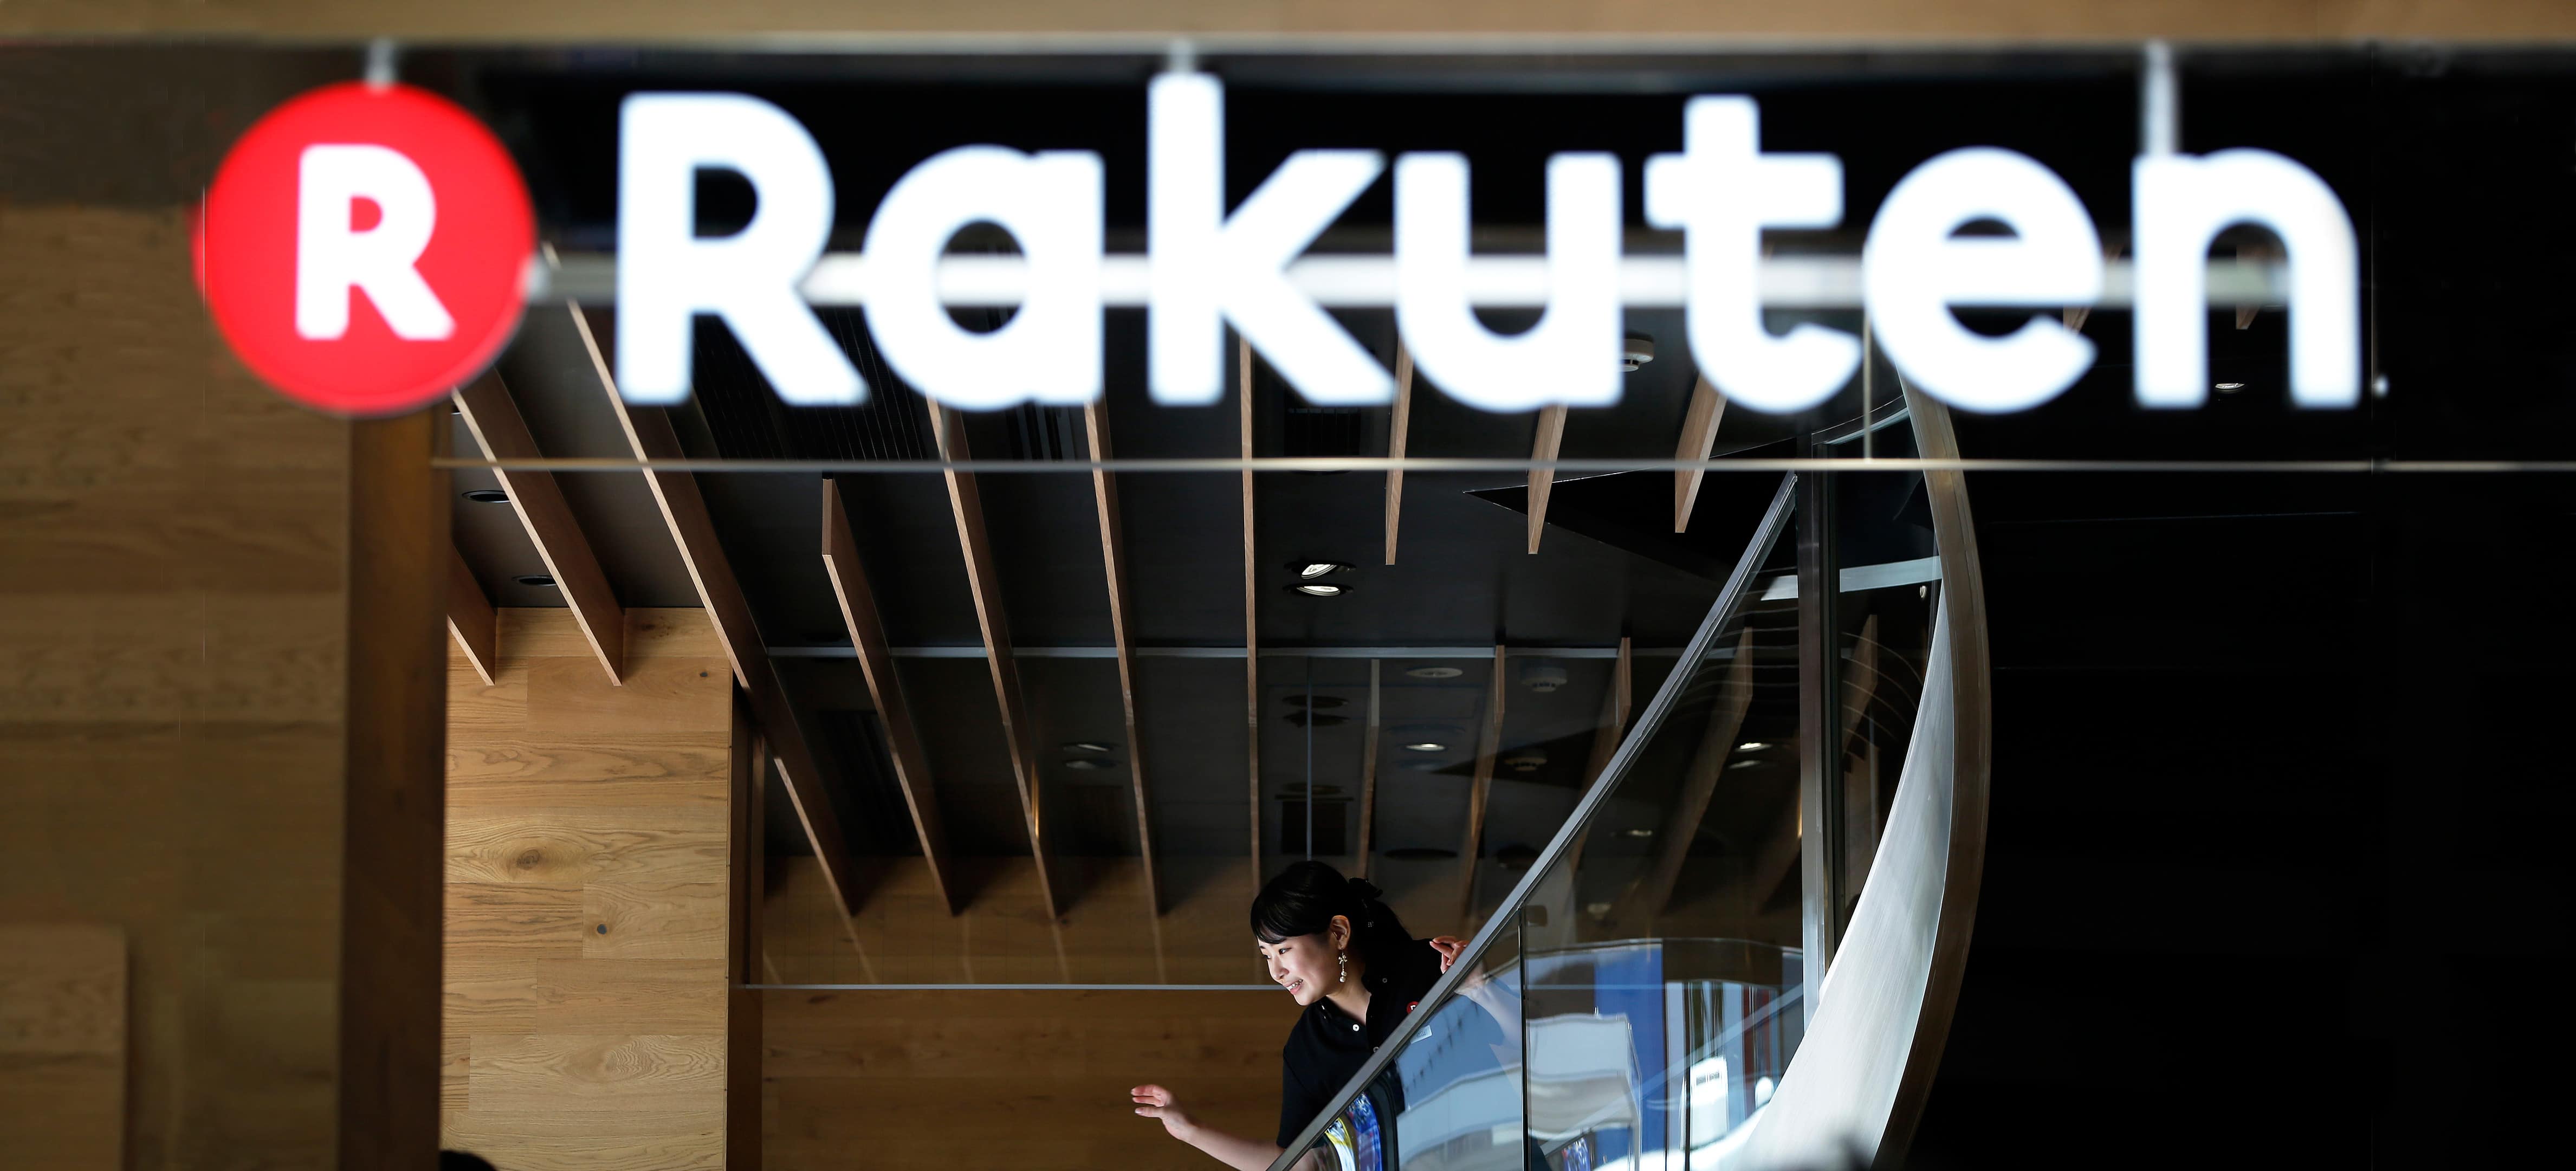 Rakuten Launches Takeout Service for Restaurants Amid Covid-19 Crisis